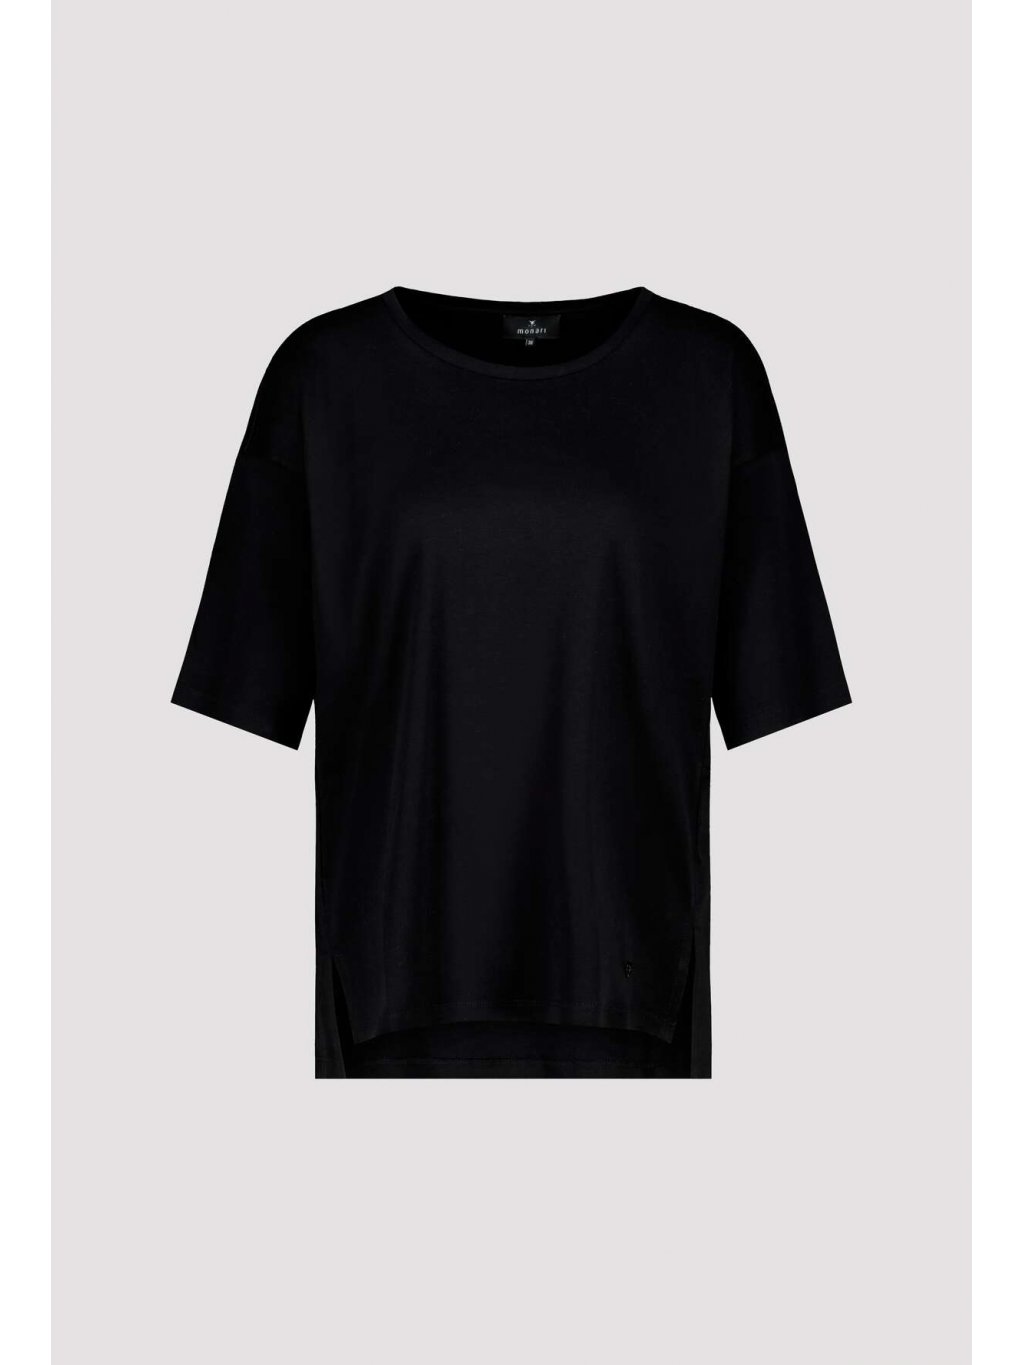 Tričko Monari 8351 černé s krátkým rukávem